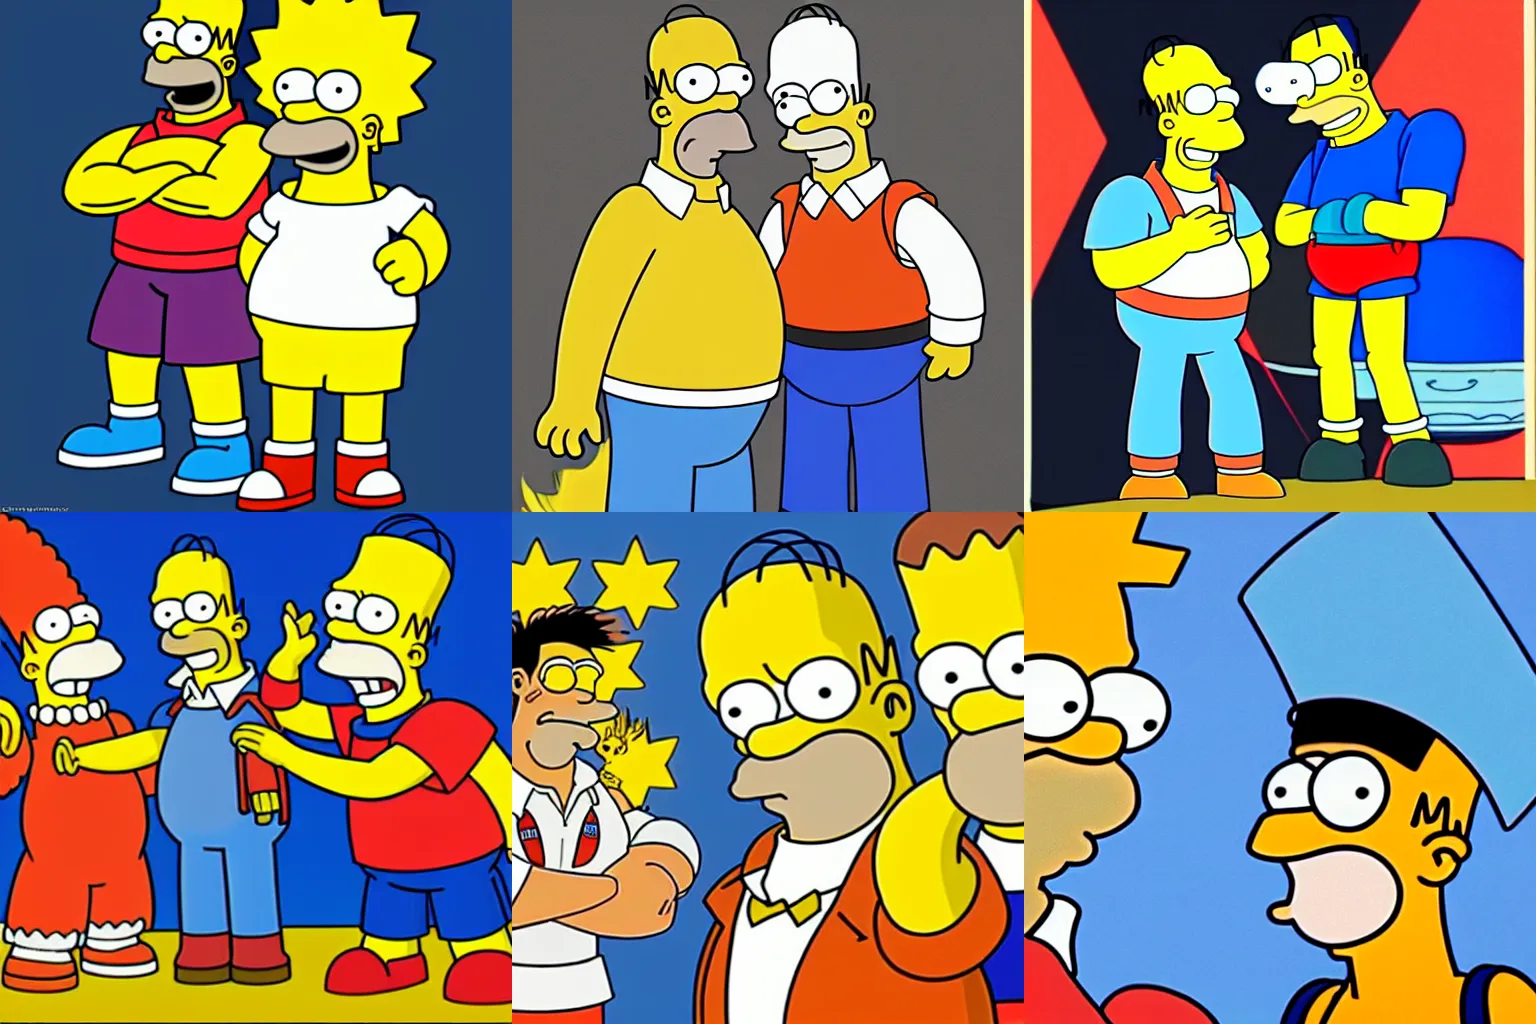 Prompt: Homer Simpson and Goku dressed in designer, cartoon